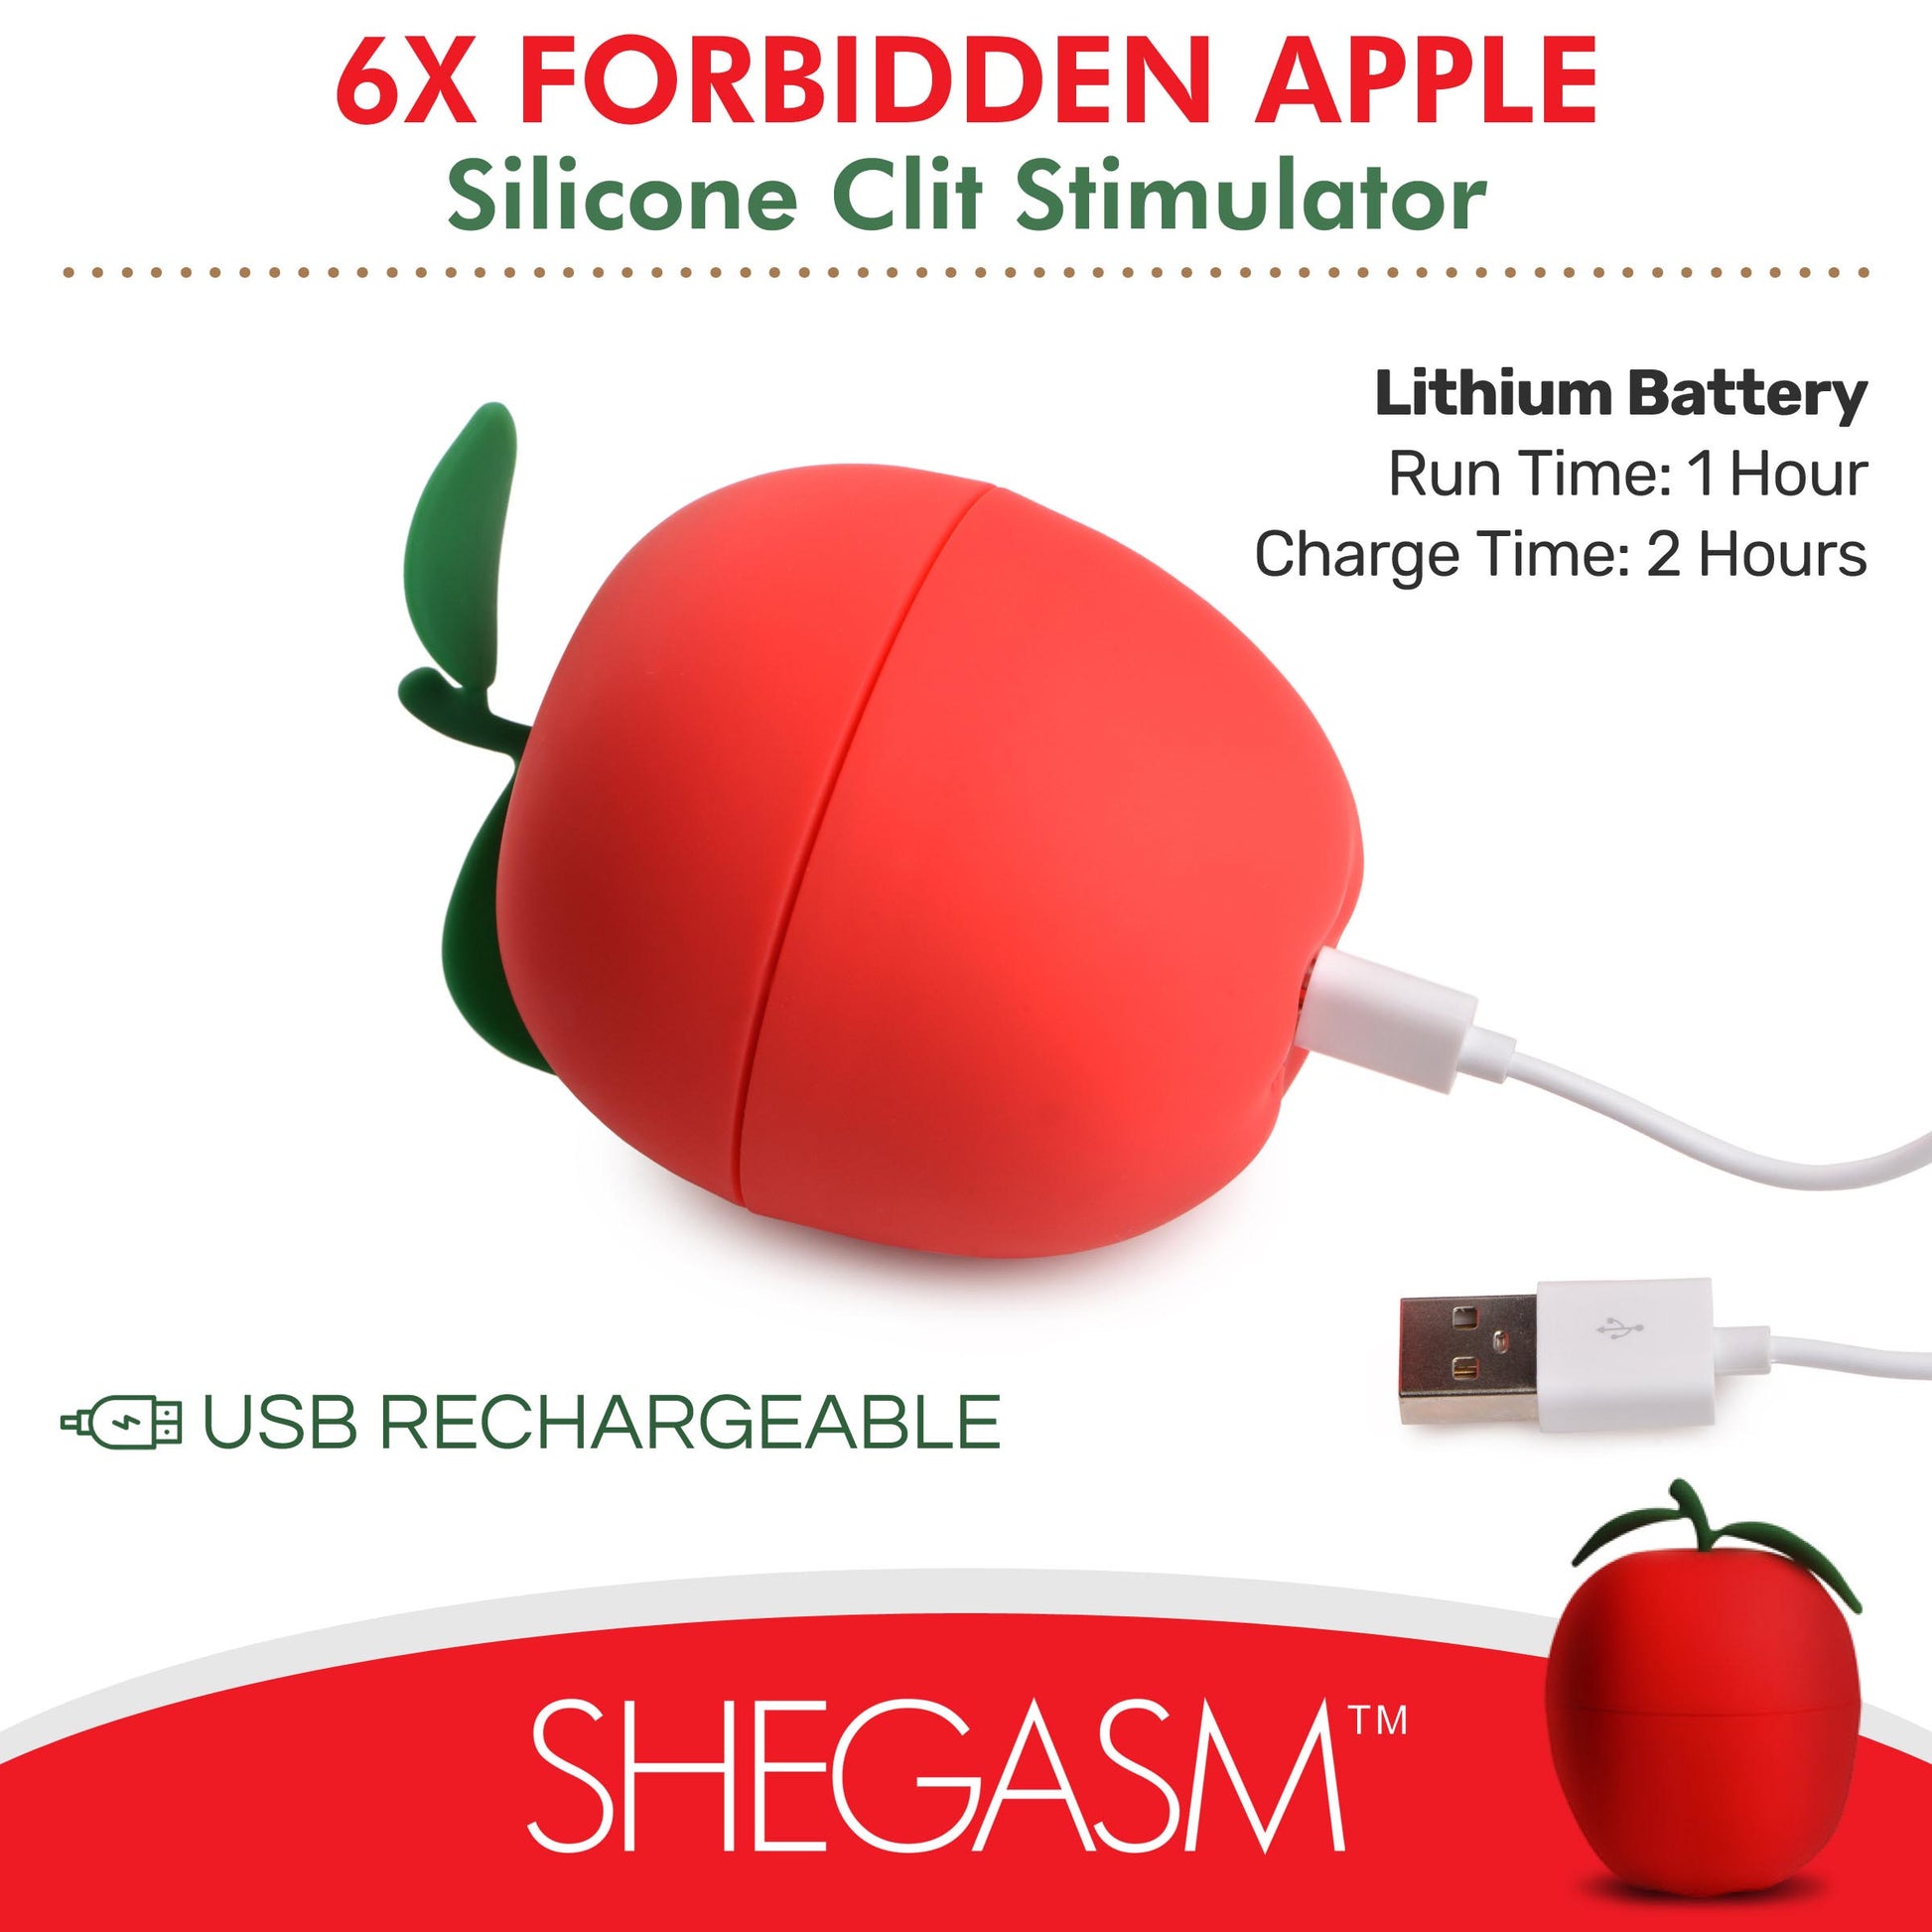 6X Forbidden Apple Silicone Clit Stimulator - UABDSM